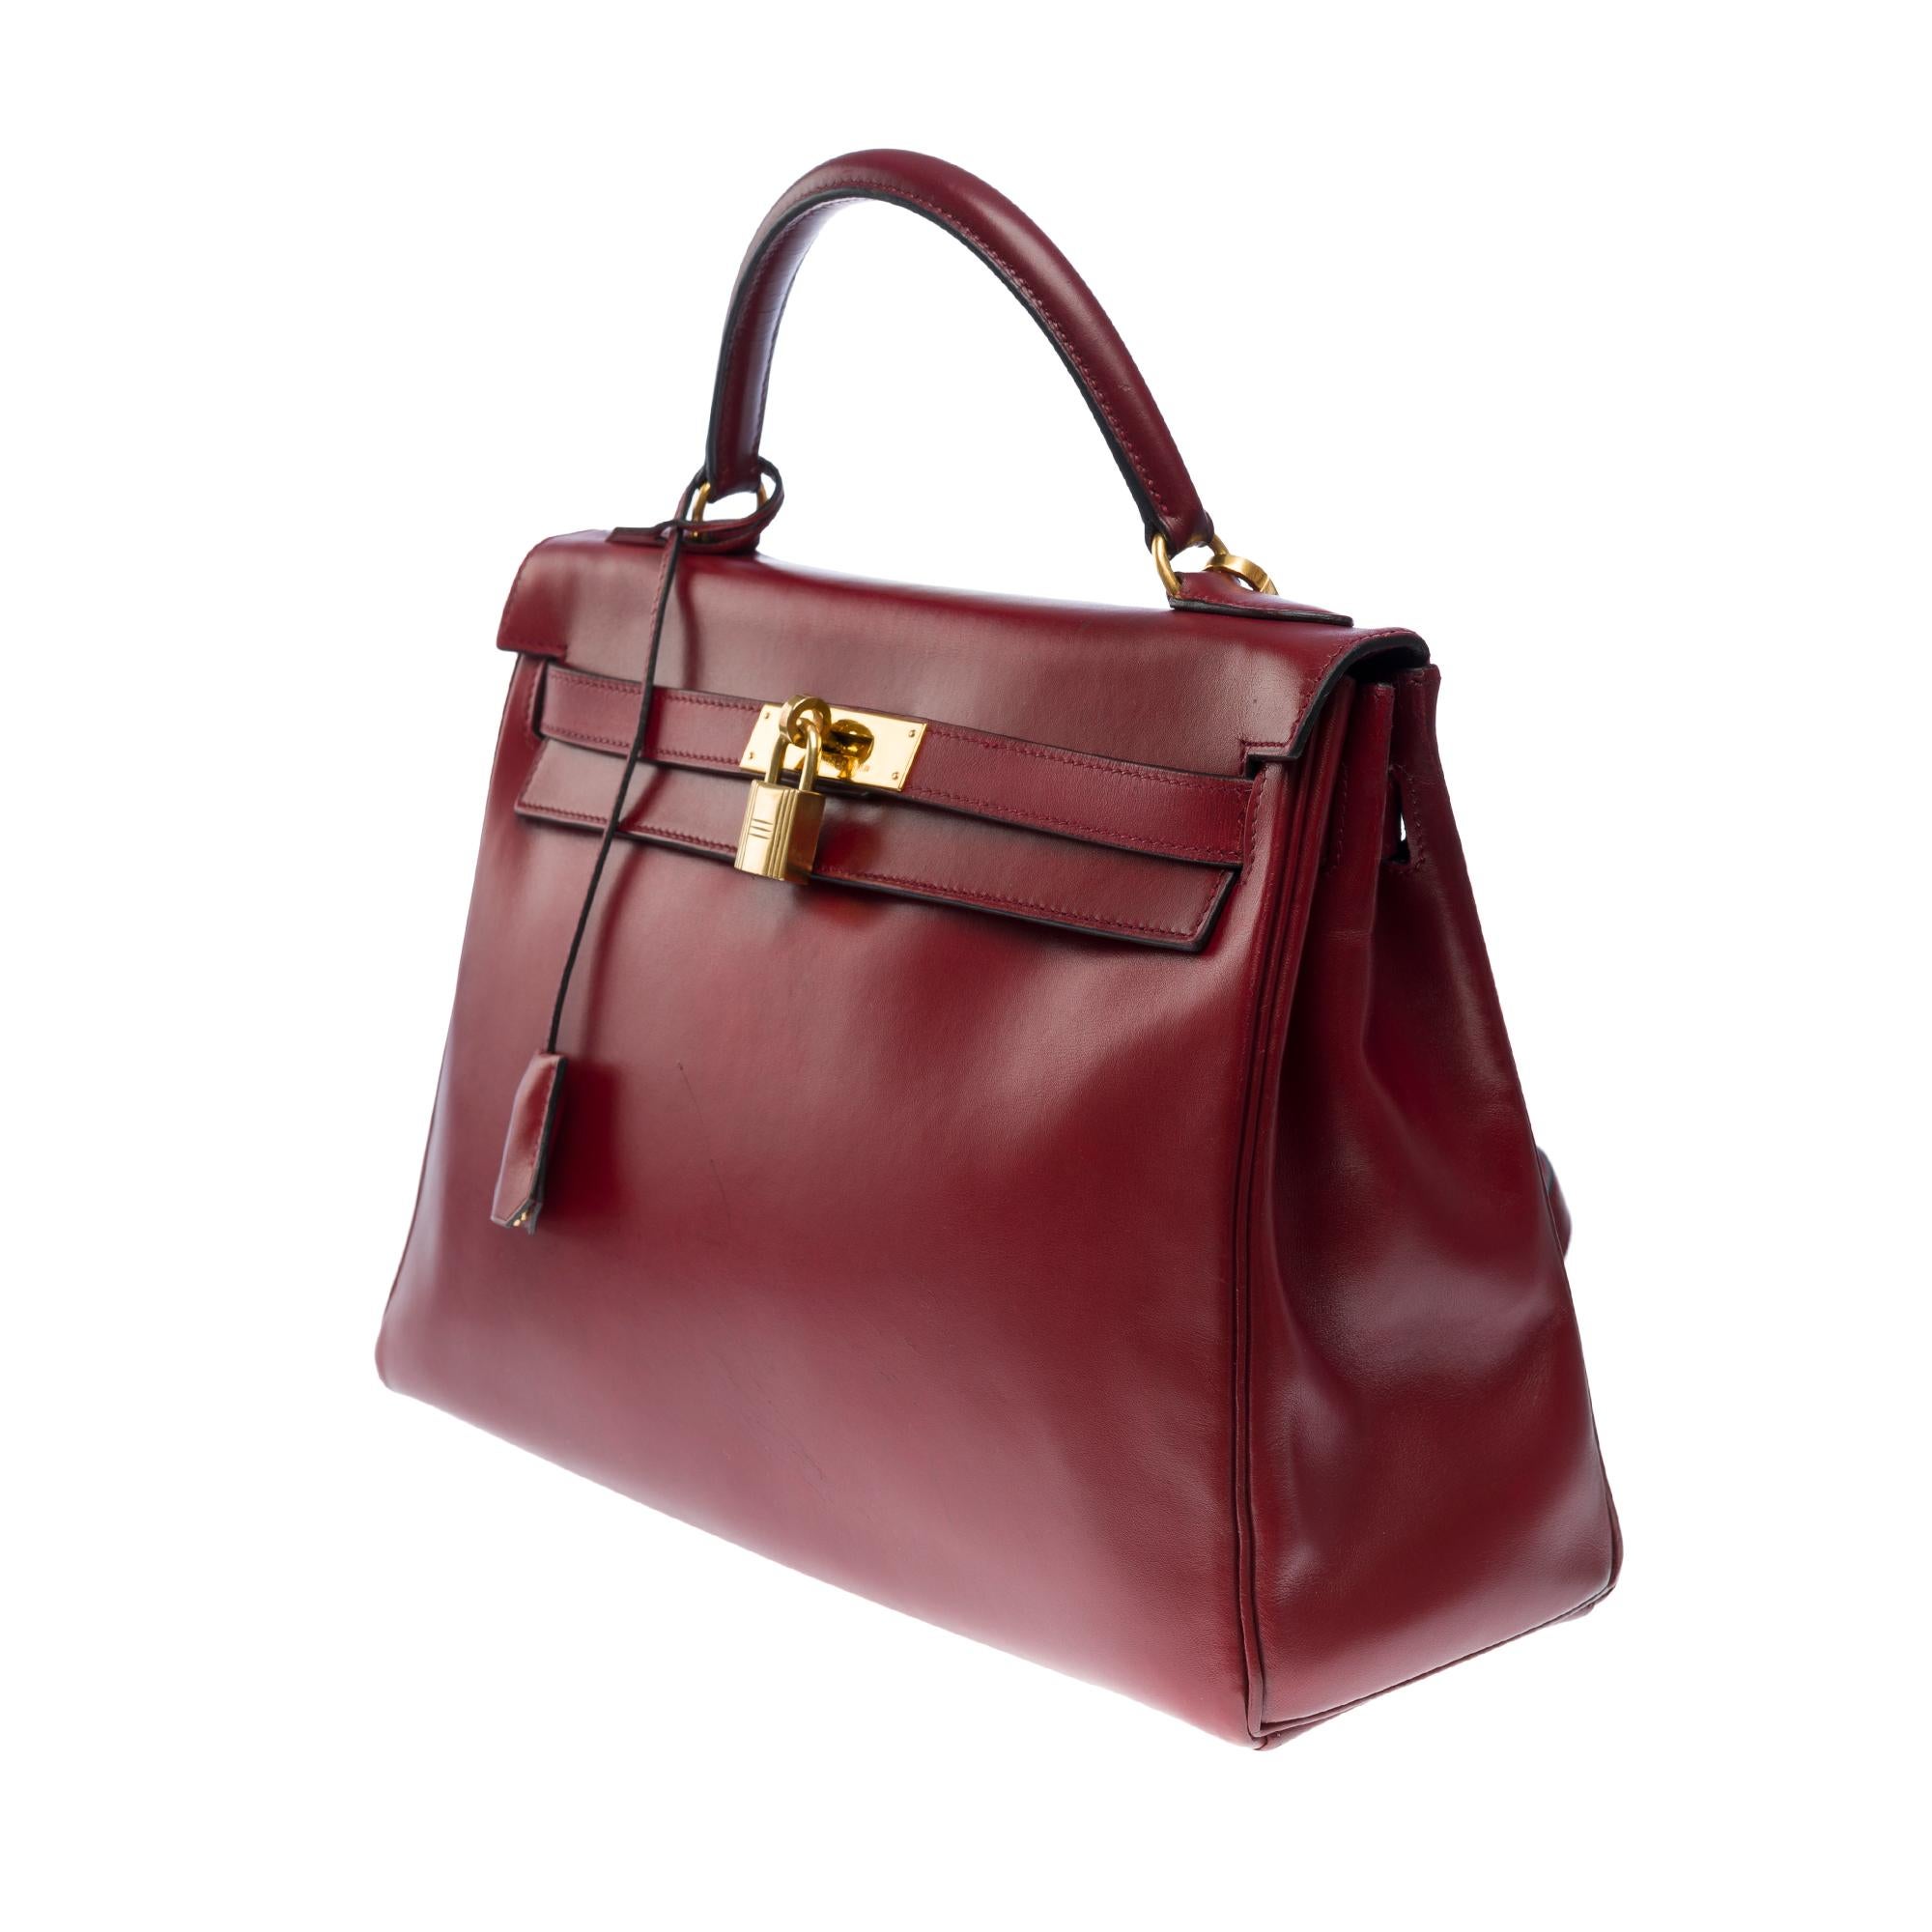 Women's or Men's Hermès Kelly 32 retourne handbag strap in Burgundy box calfskin leather, GHW